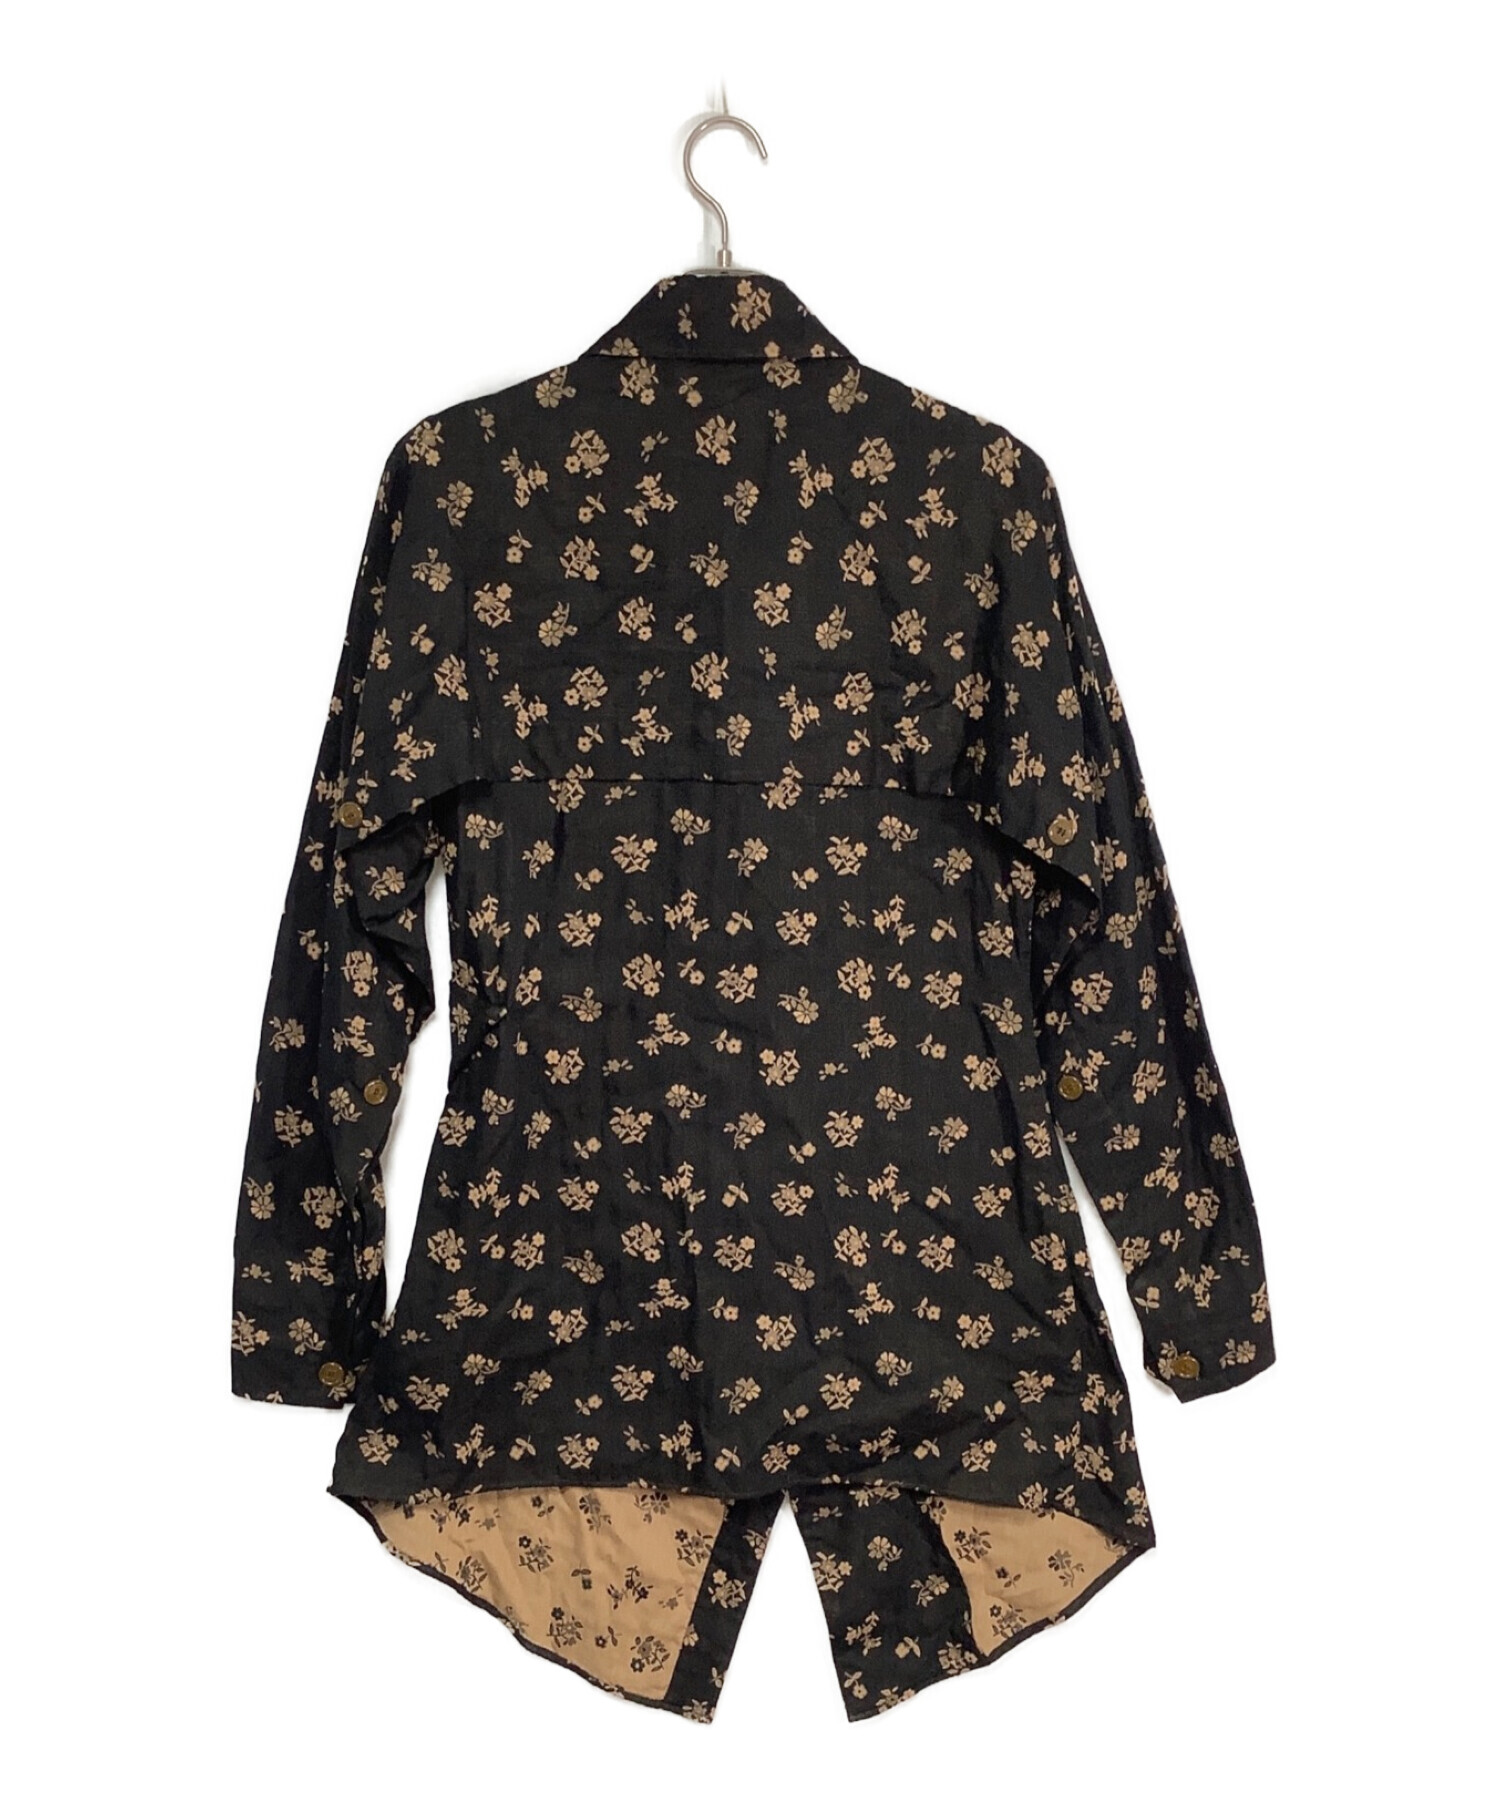 Vivienne Westwood man (ヴィヴィアン ウェストウッド マン) 変形ロングシャツ ブラック サイズ:48 未使用品